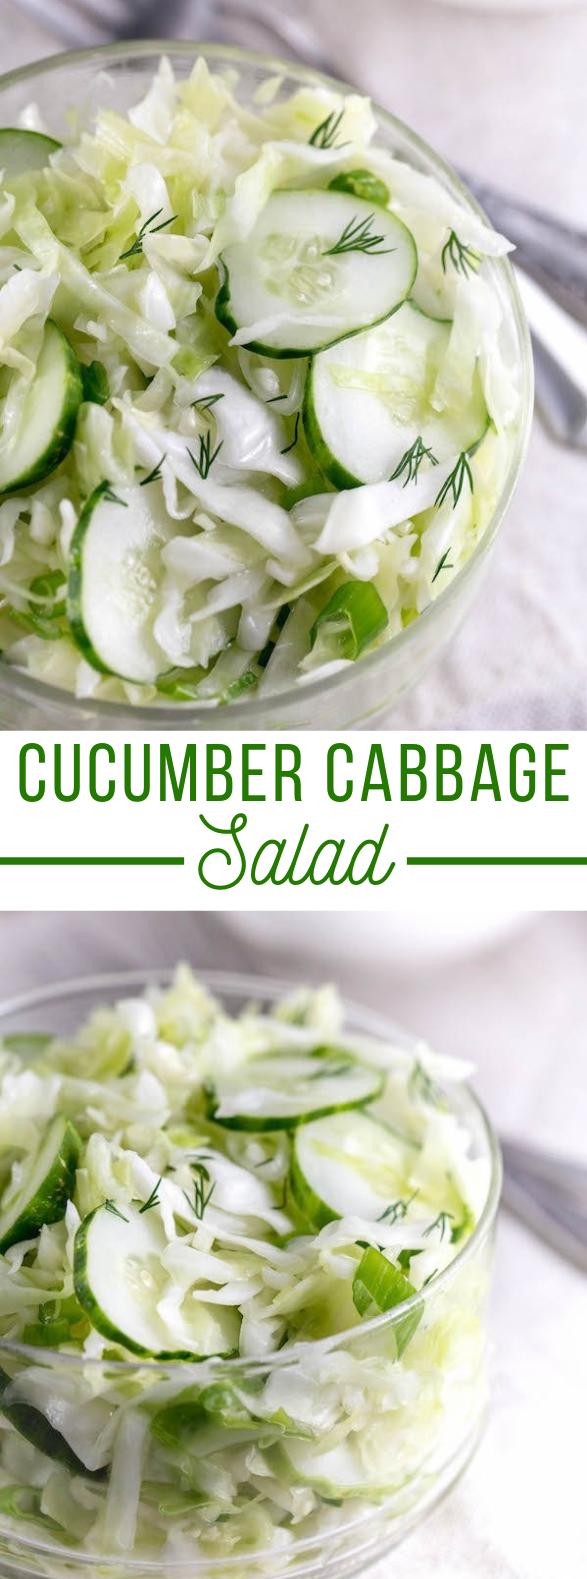 Cabbage Salad with Cucumbers #vegetarian #quicksalad